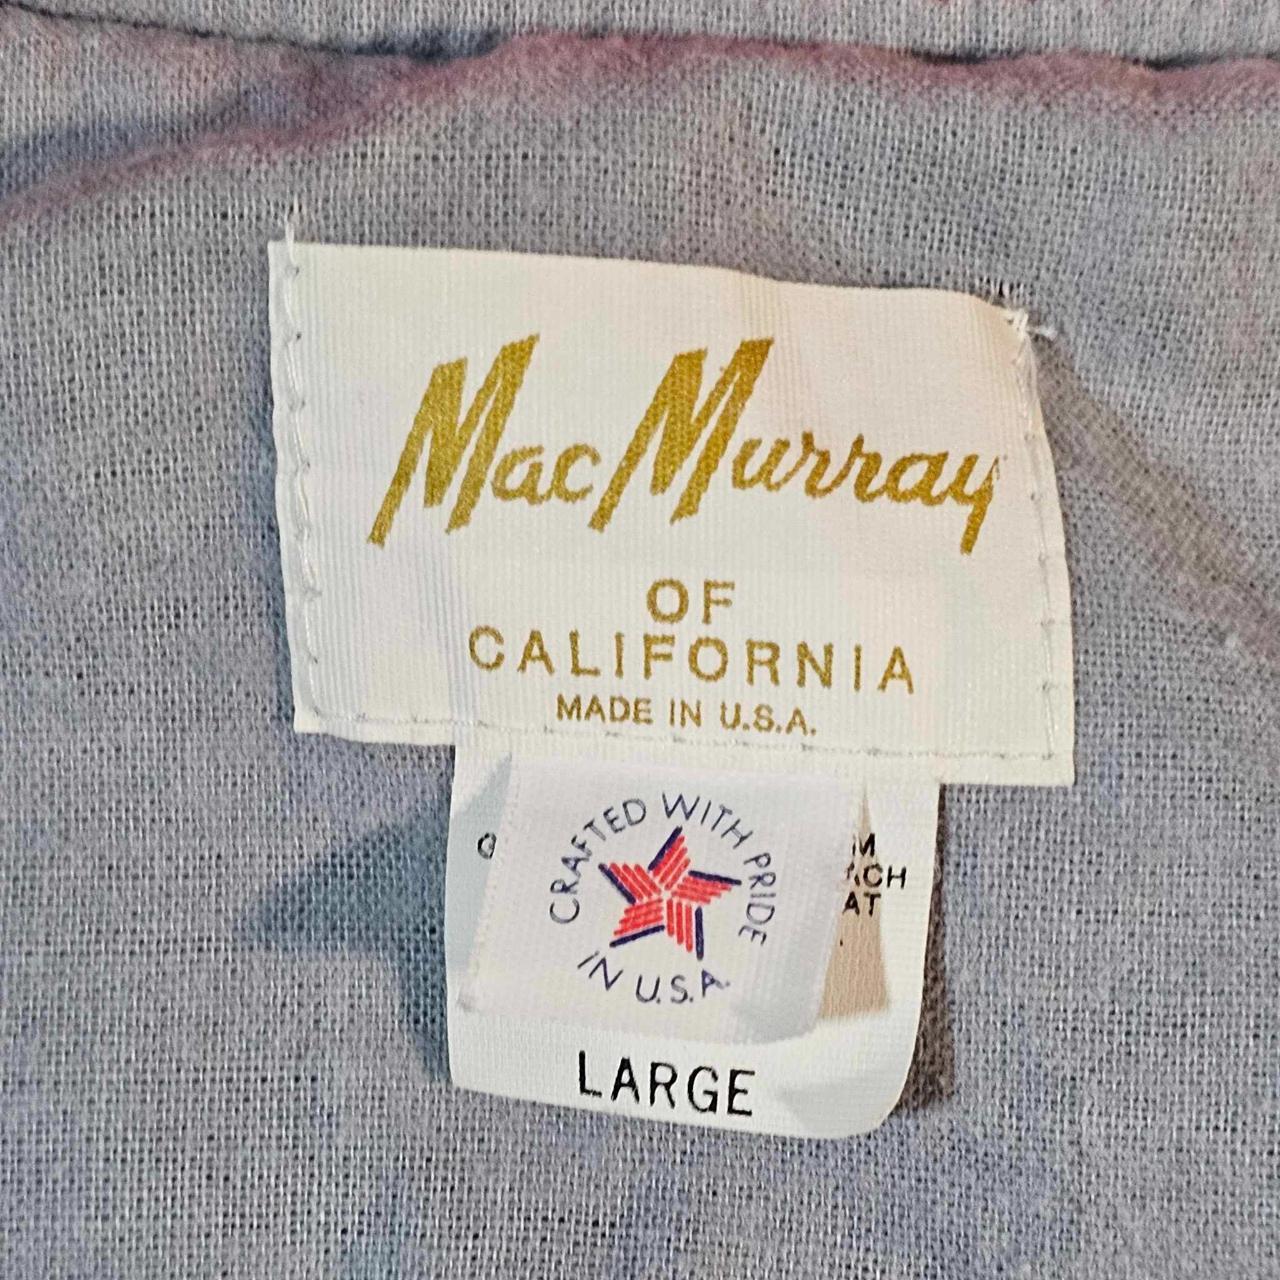 California Angels Vintage s Mac Murray Satin